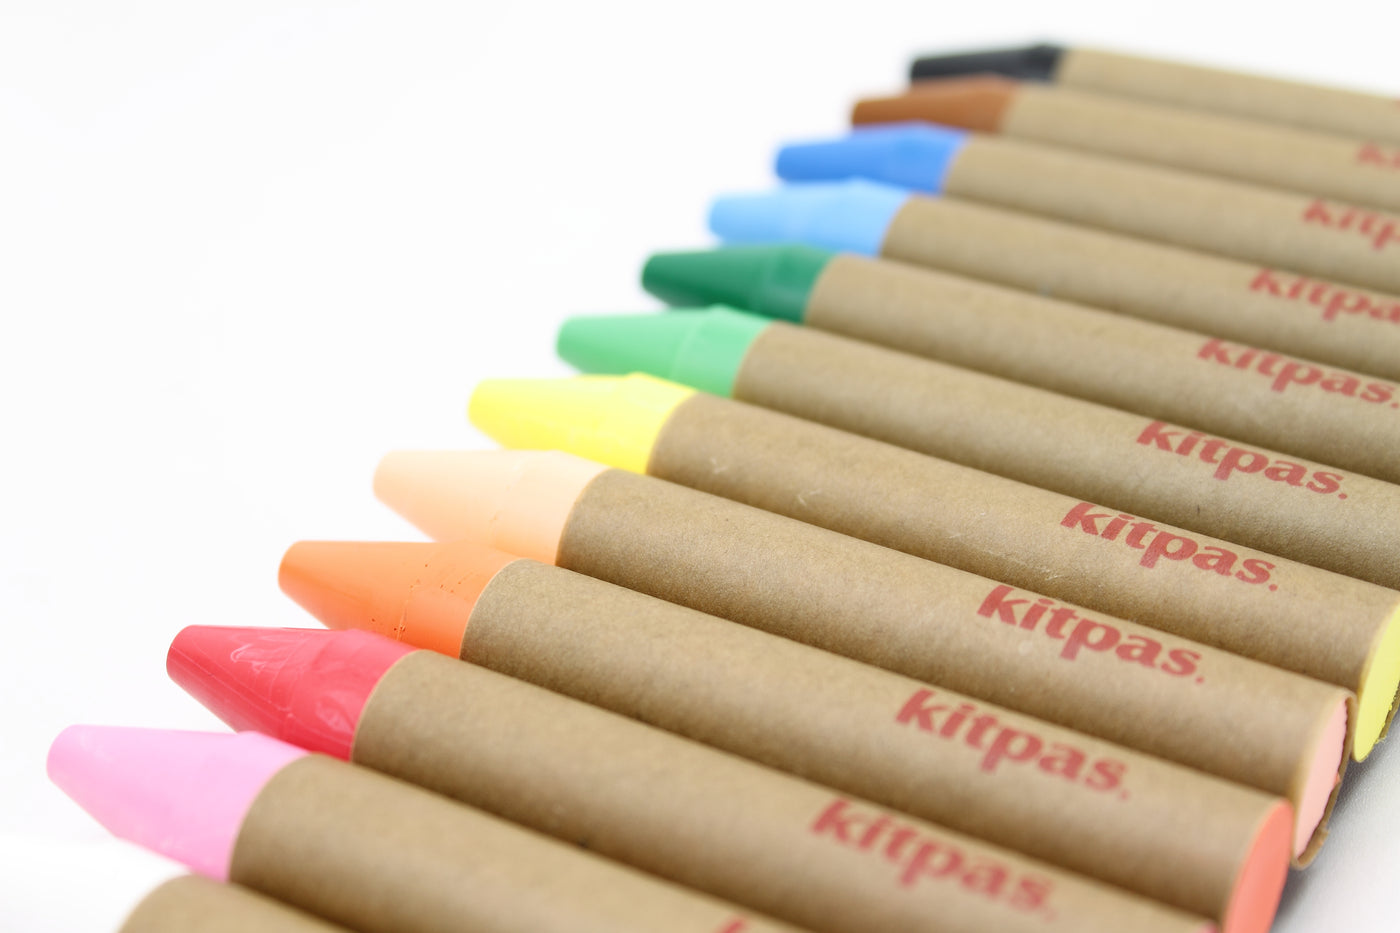 Kitpas Art Crayons - Size Large 12-pack